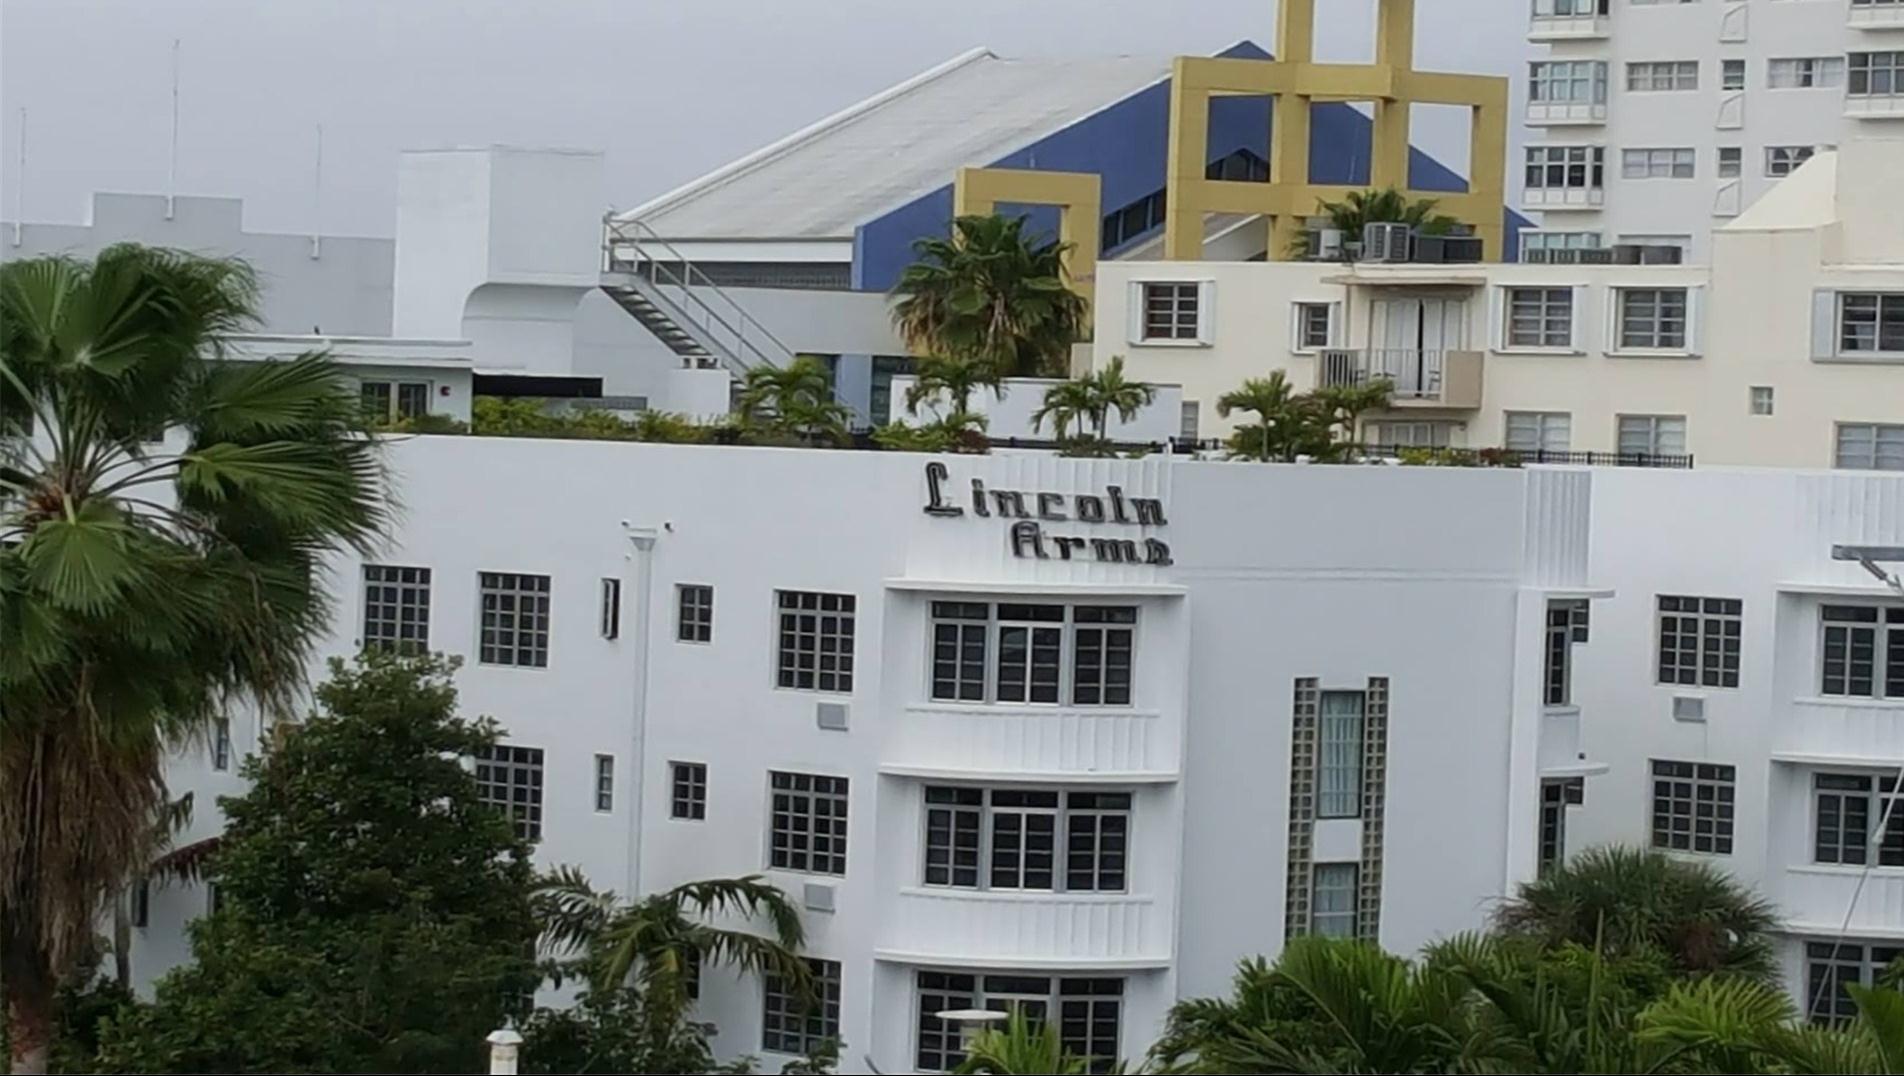 Lincoln Arms Suites in Miami Beach, FL